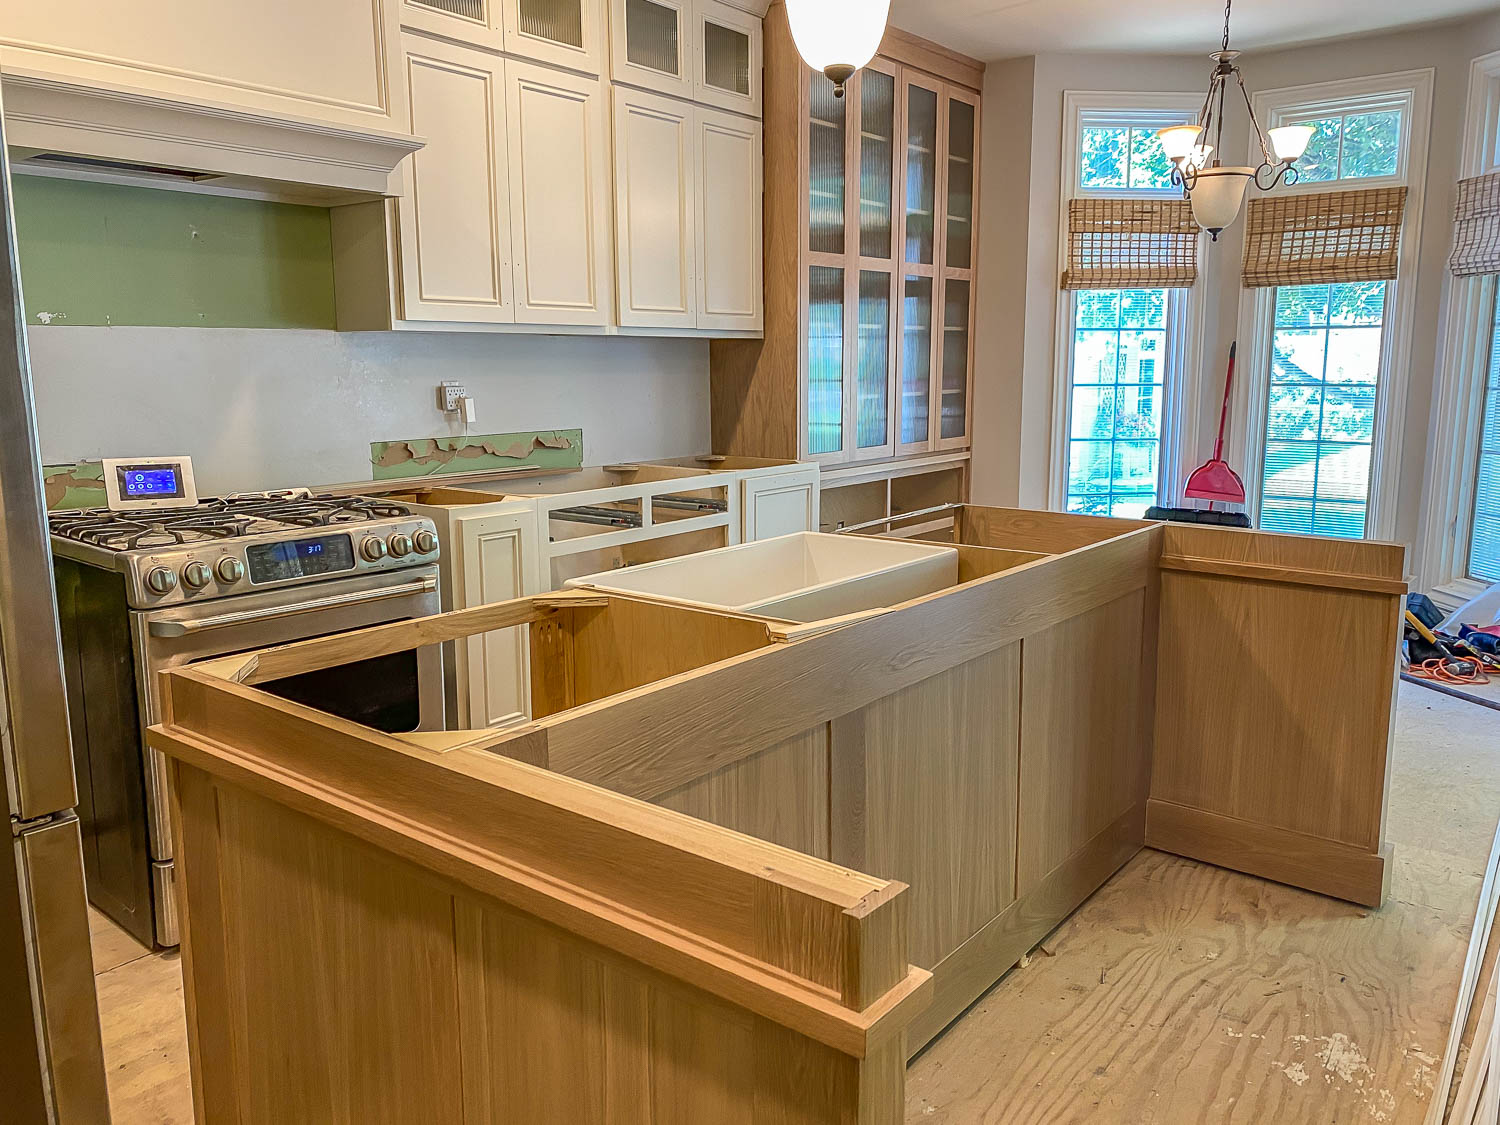 https://jenwoodhouse.com/wp-content/uploads/2021/10/kitchen-renovation-cabinet-install-5.jpg